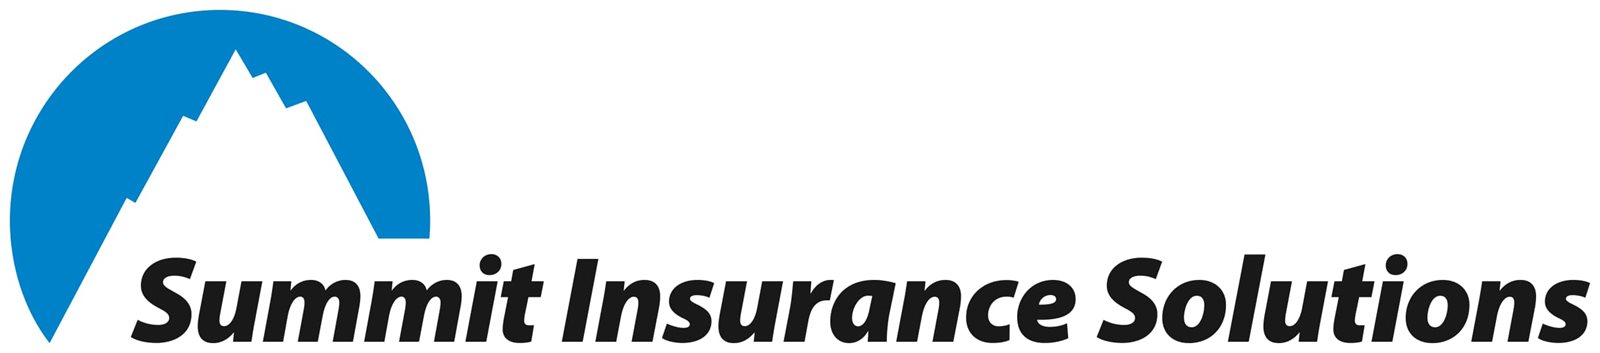 Summit Insurance Solutions